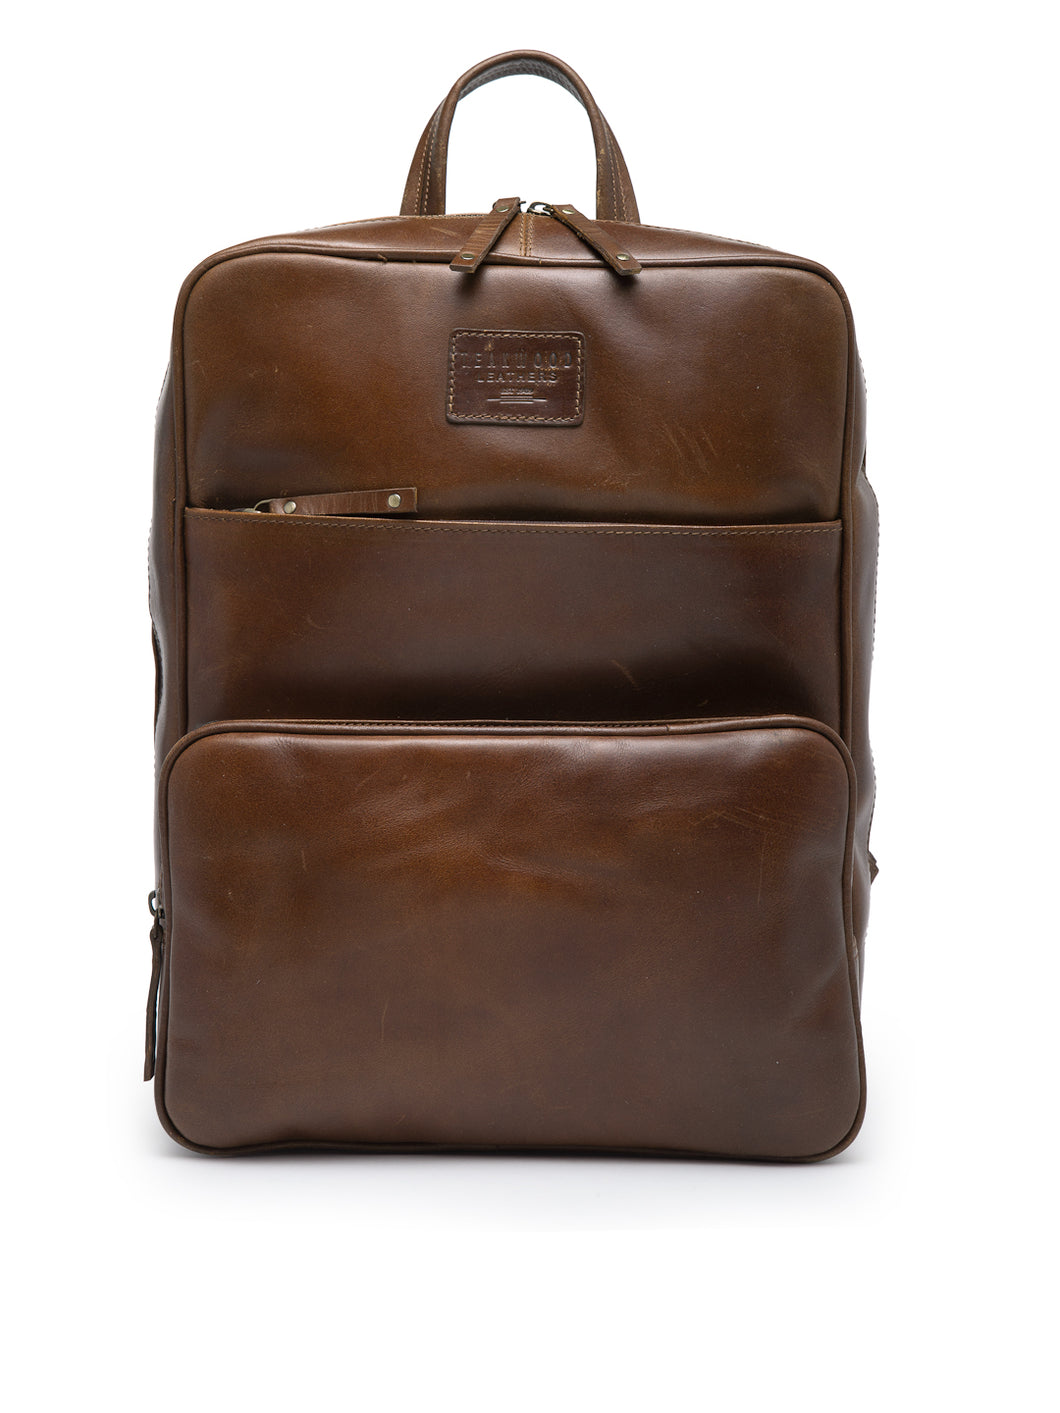 Teakwood Unisex Genuine Leather Tan Solid Backpack||Unisex Laptop Bag/Backpack